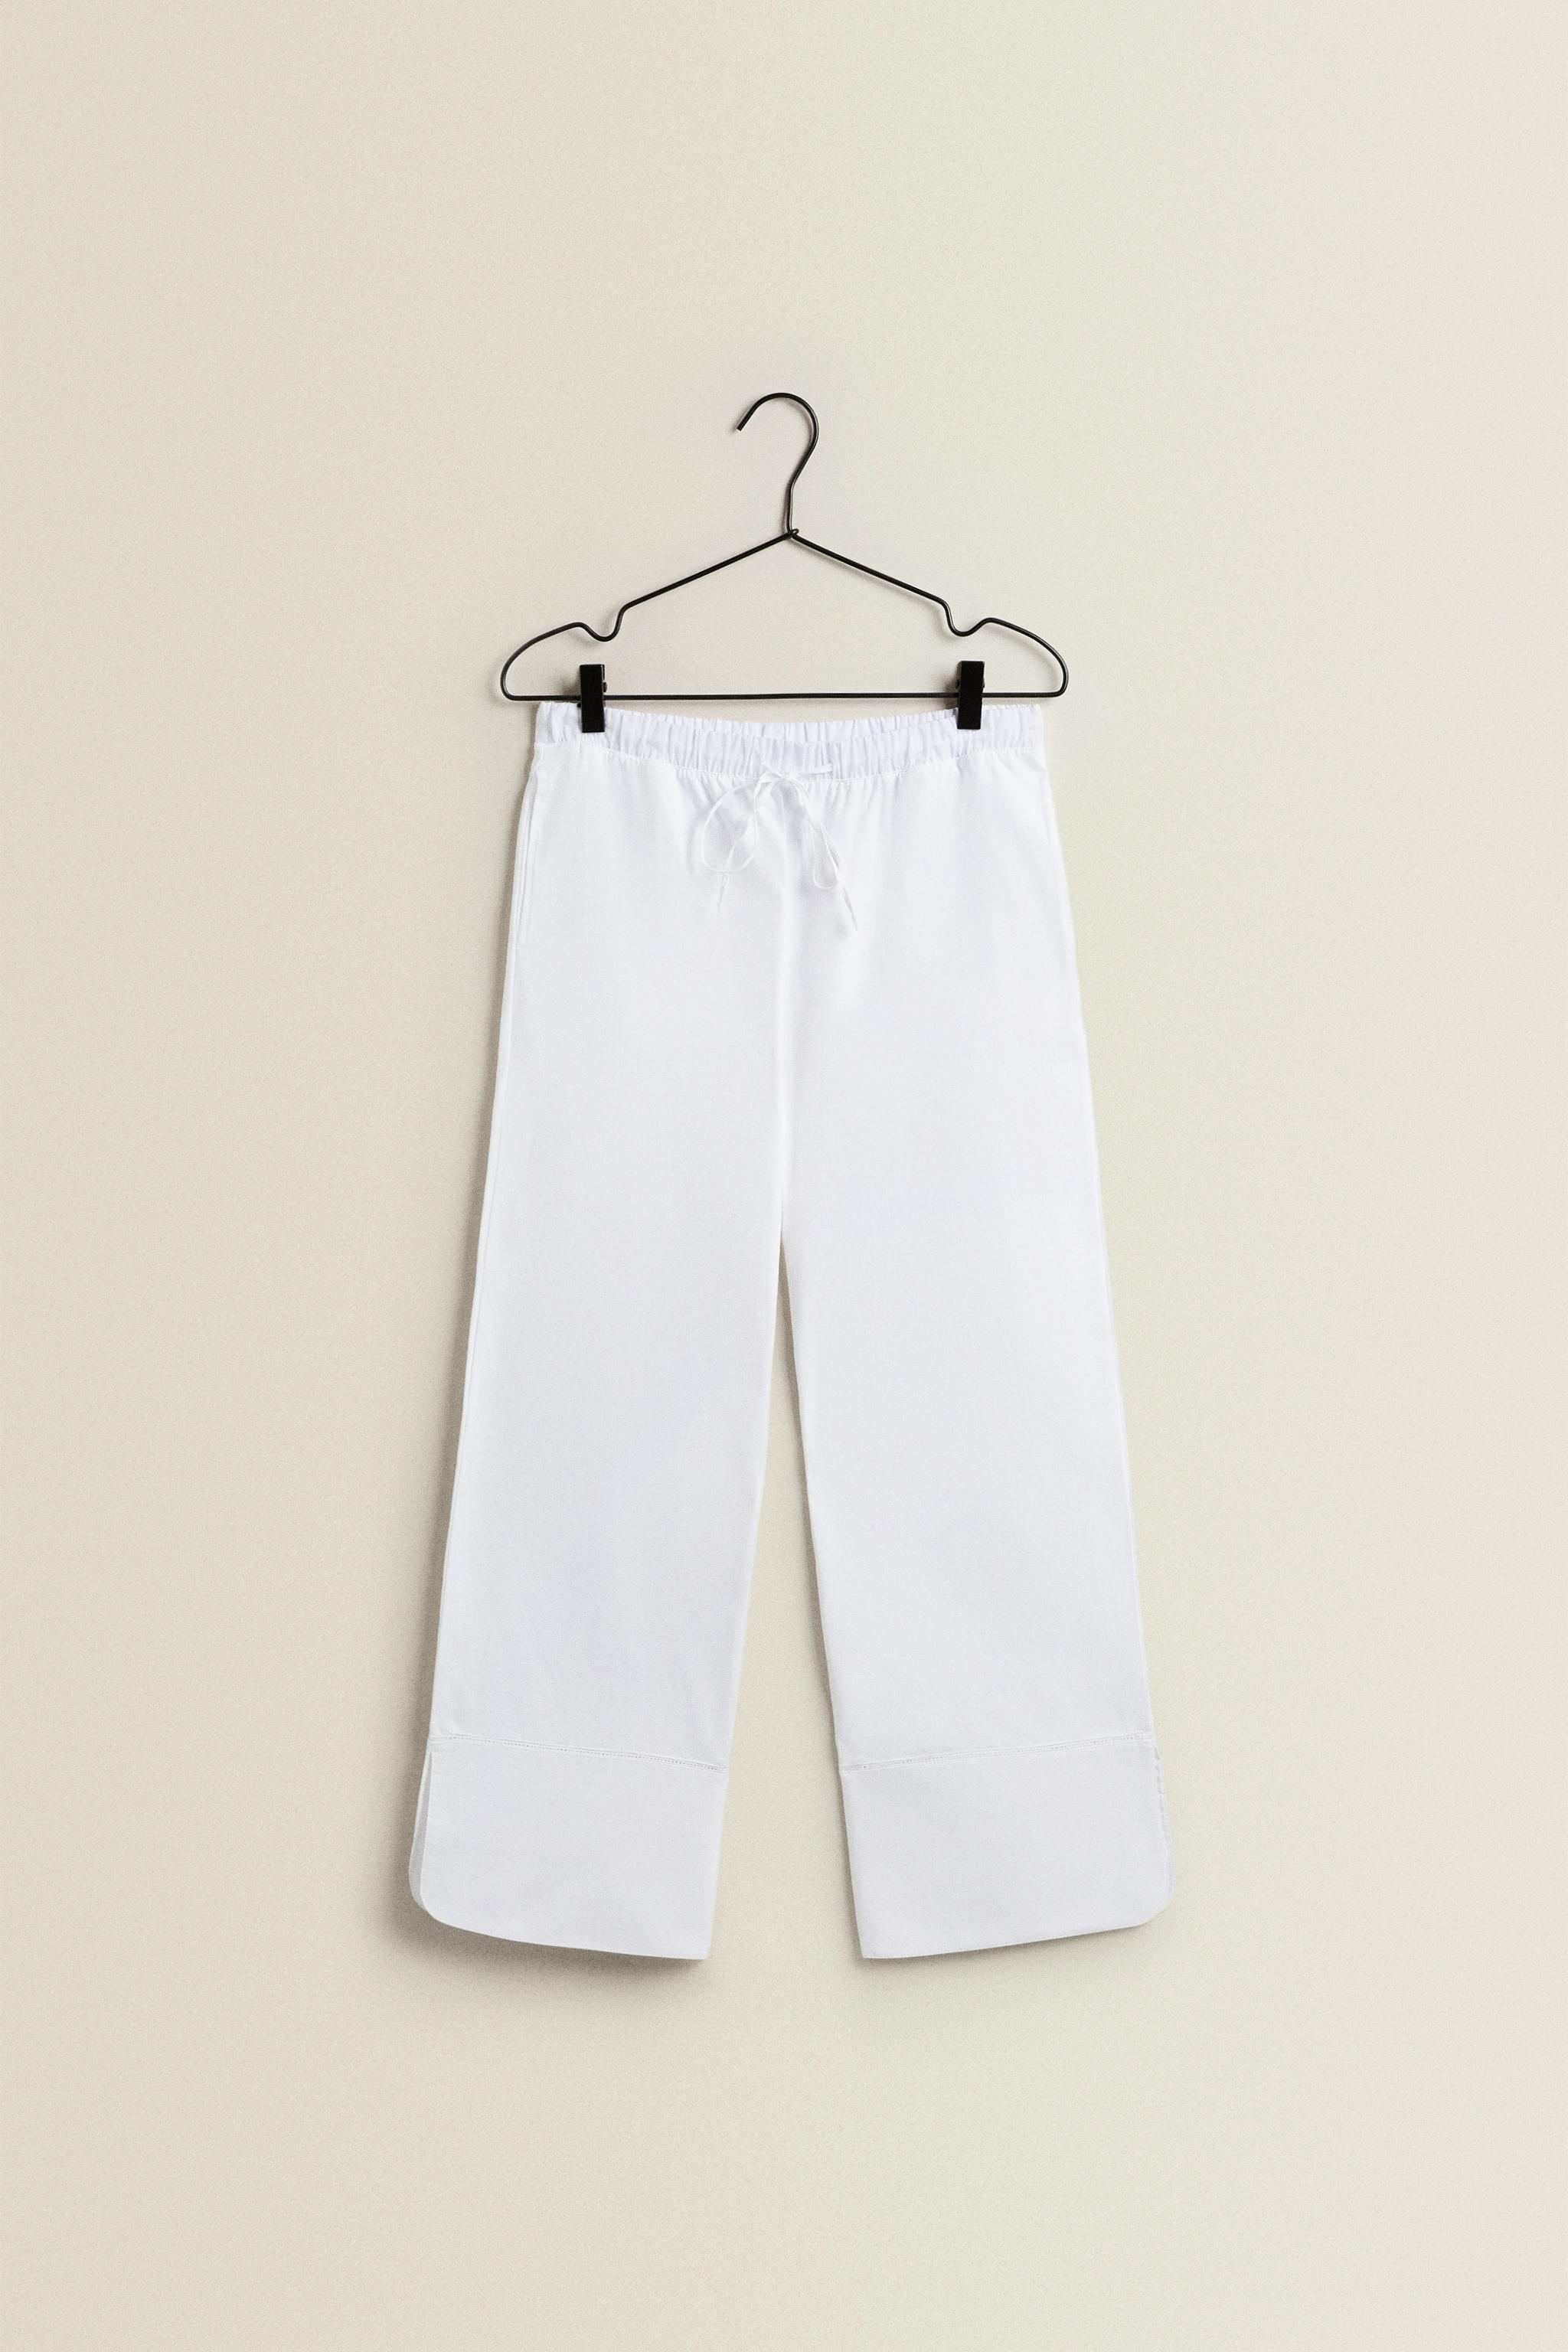 Off-White Cotton Lace Narrow Trouser